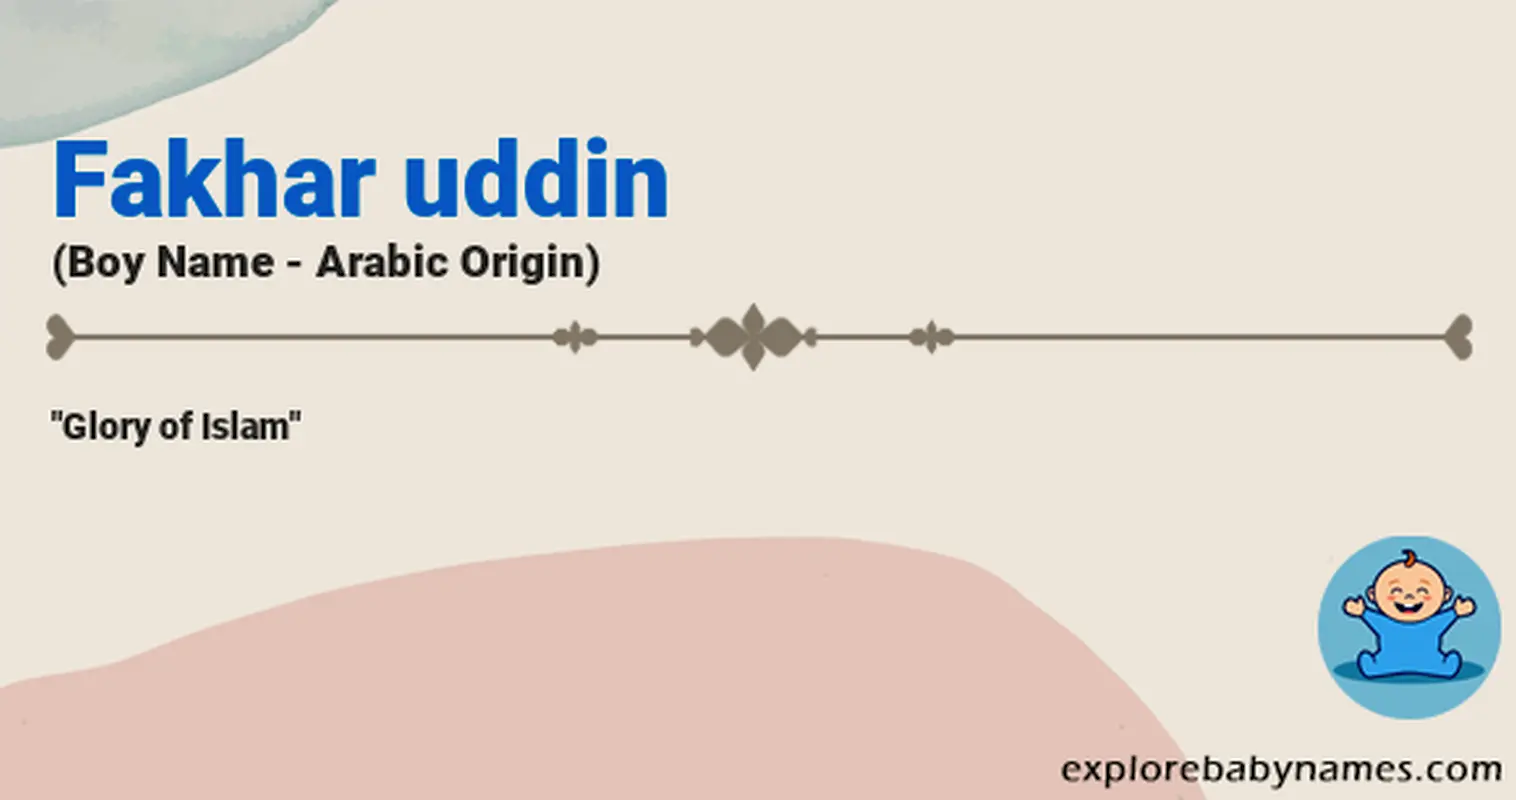 Meaning of Fakhar uddin